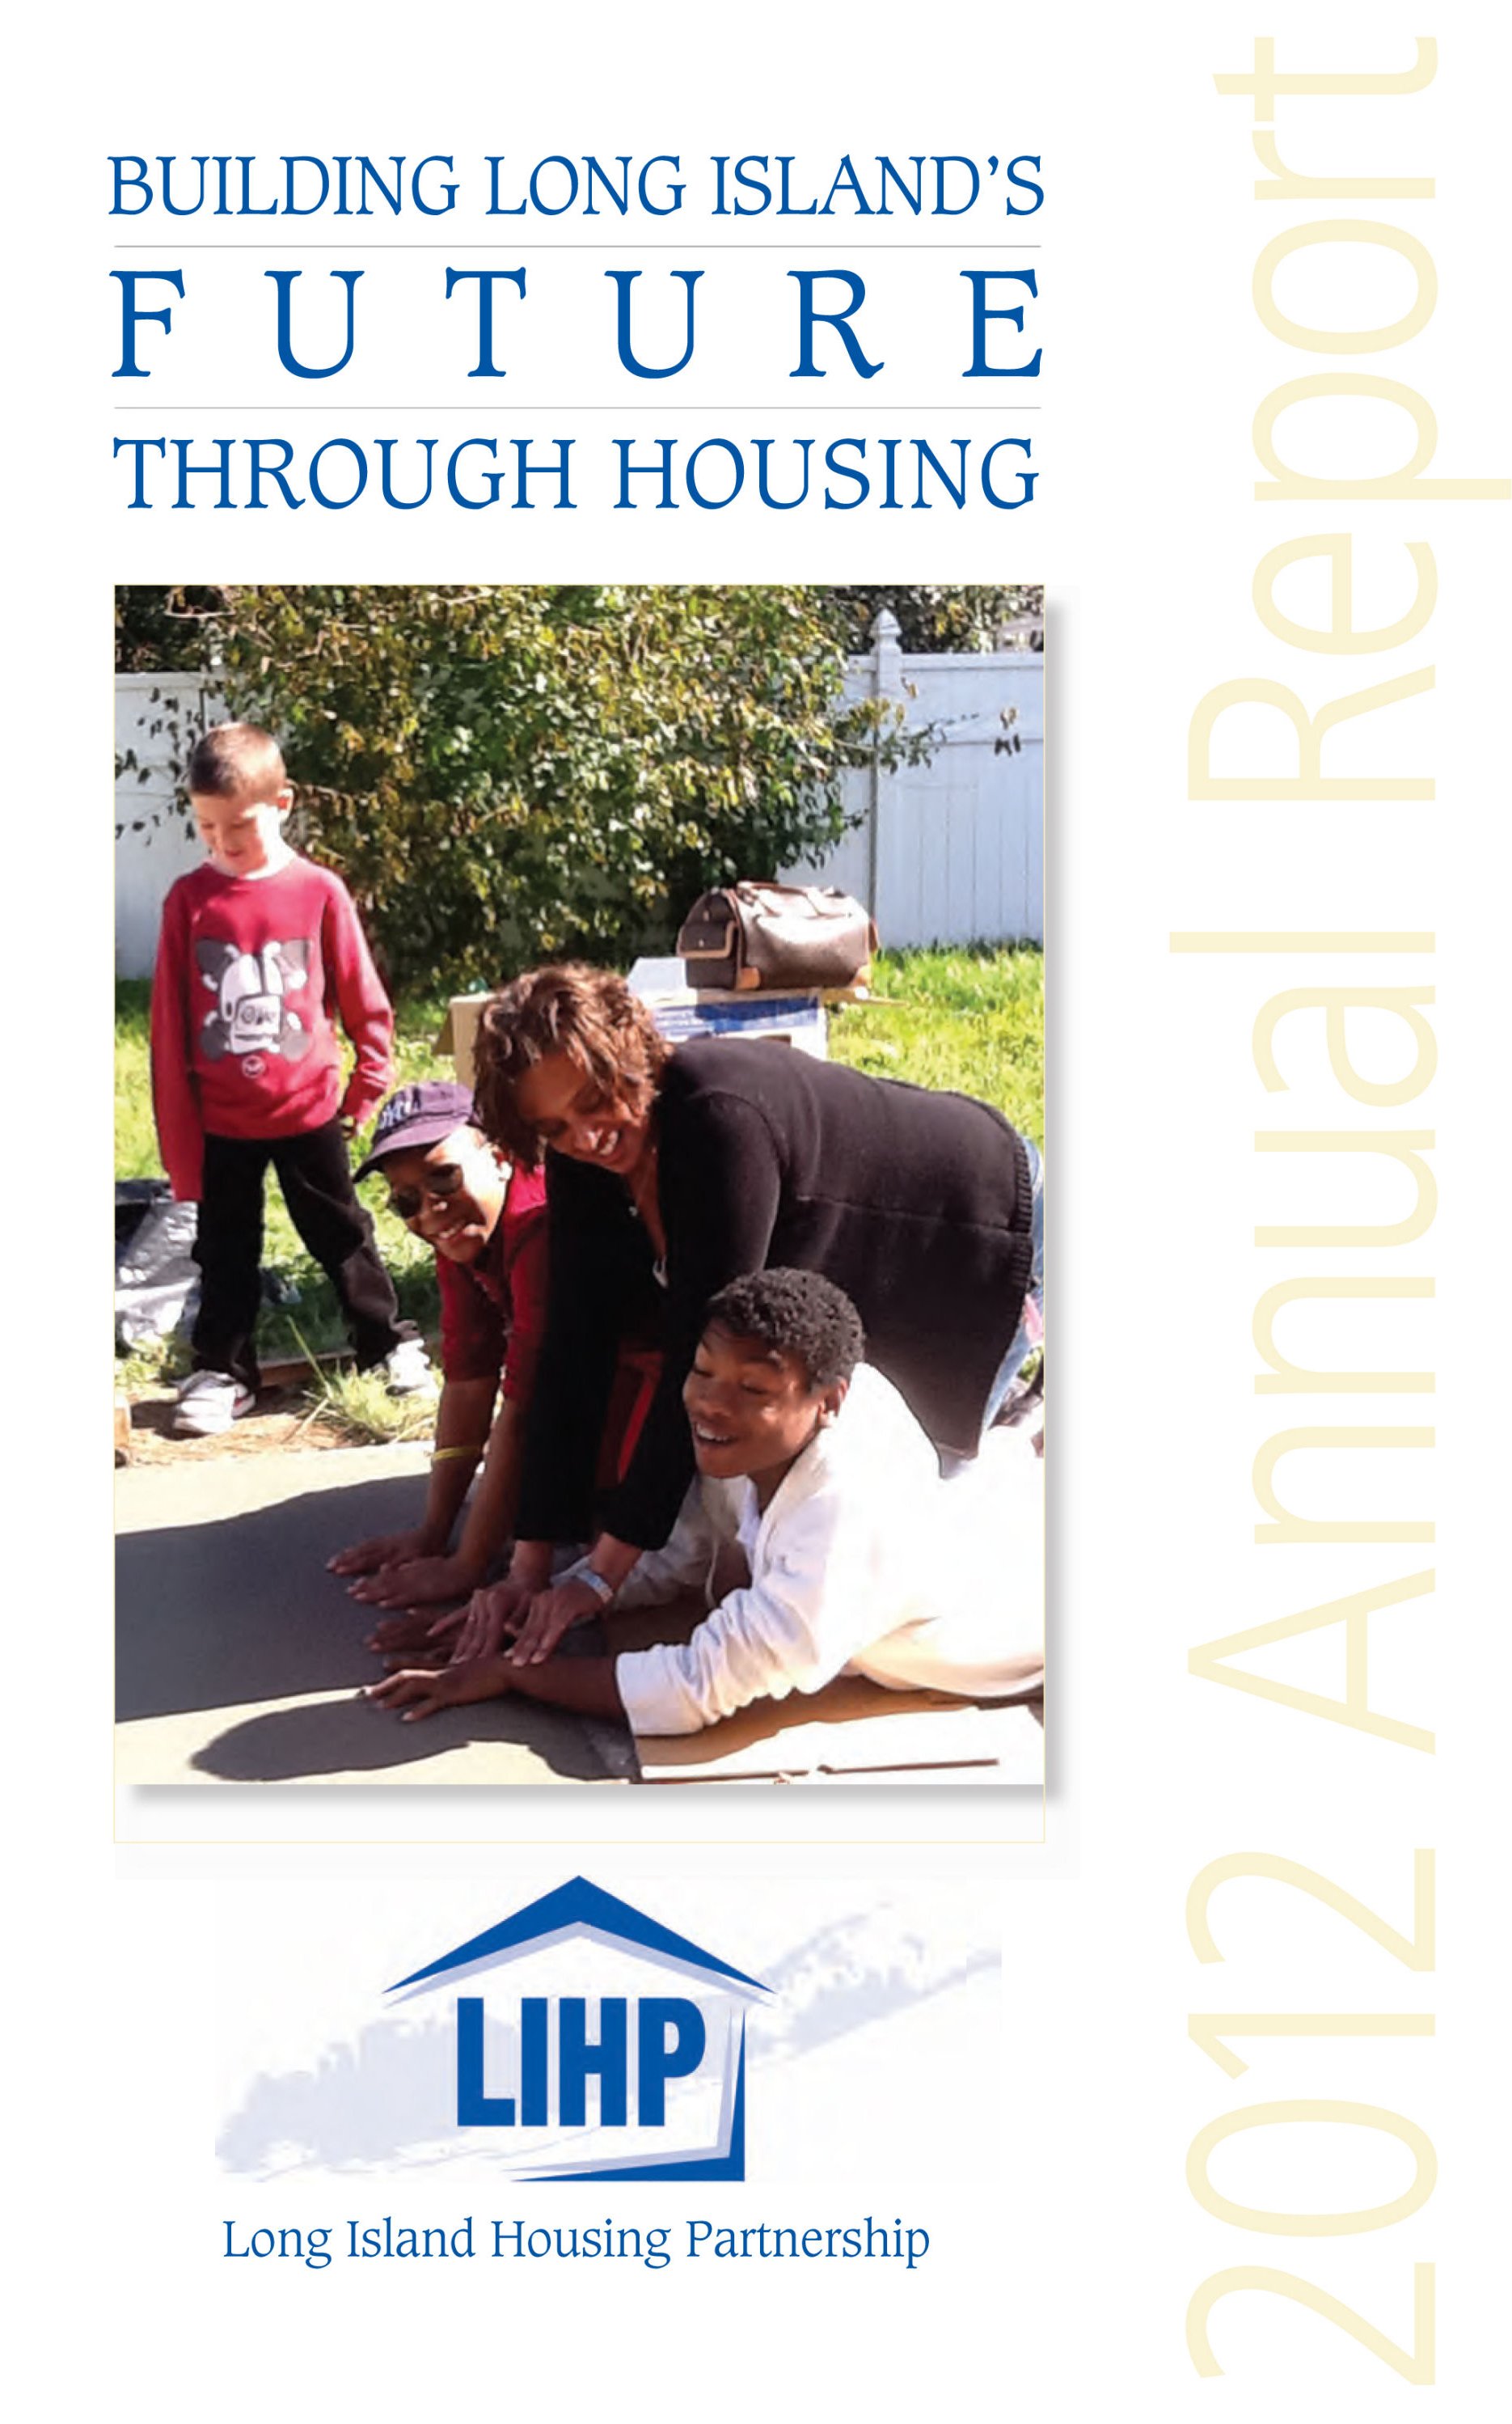 Long Island Housing Partnership 2012 Annual Report